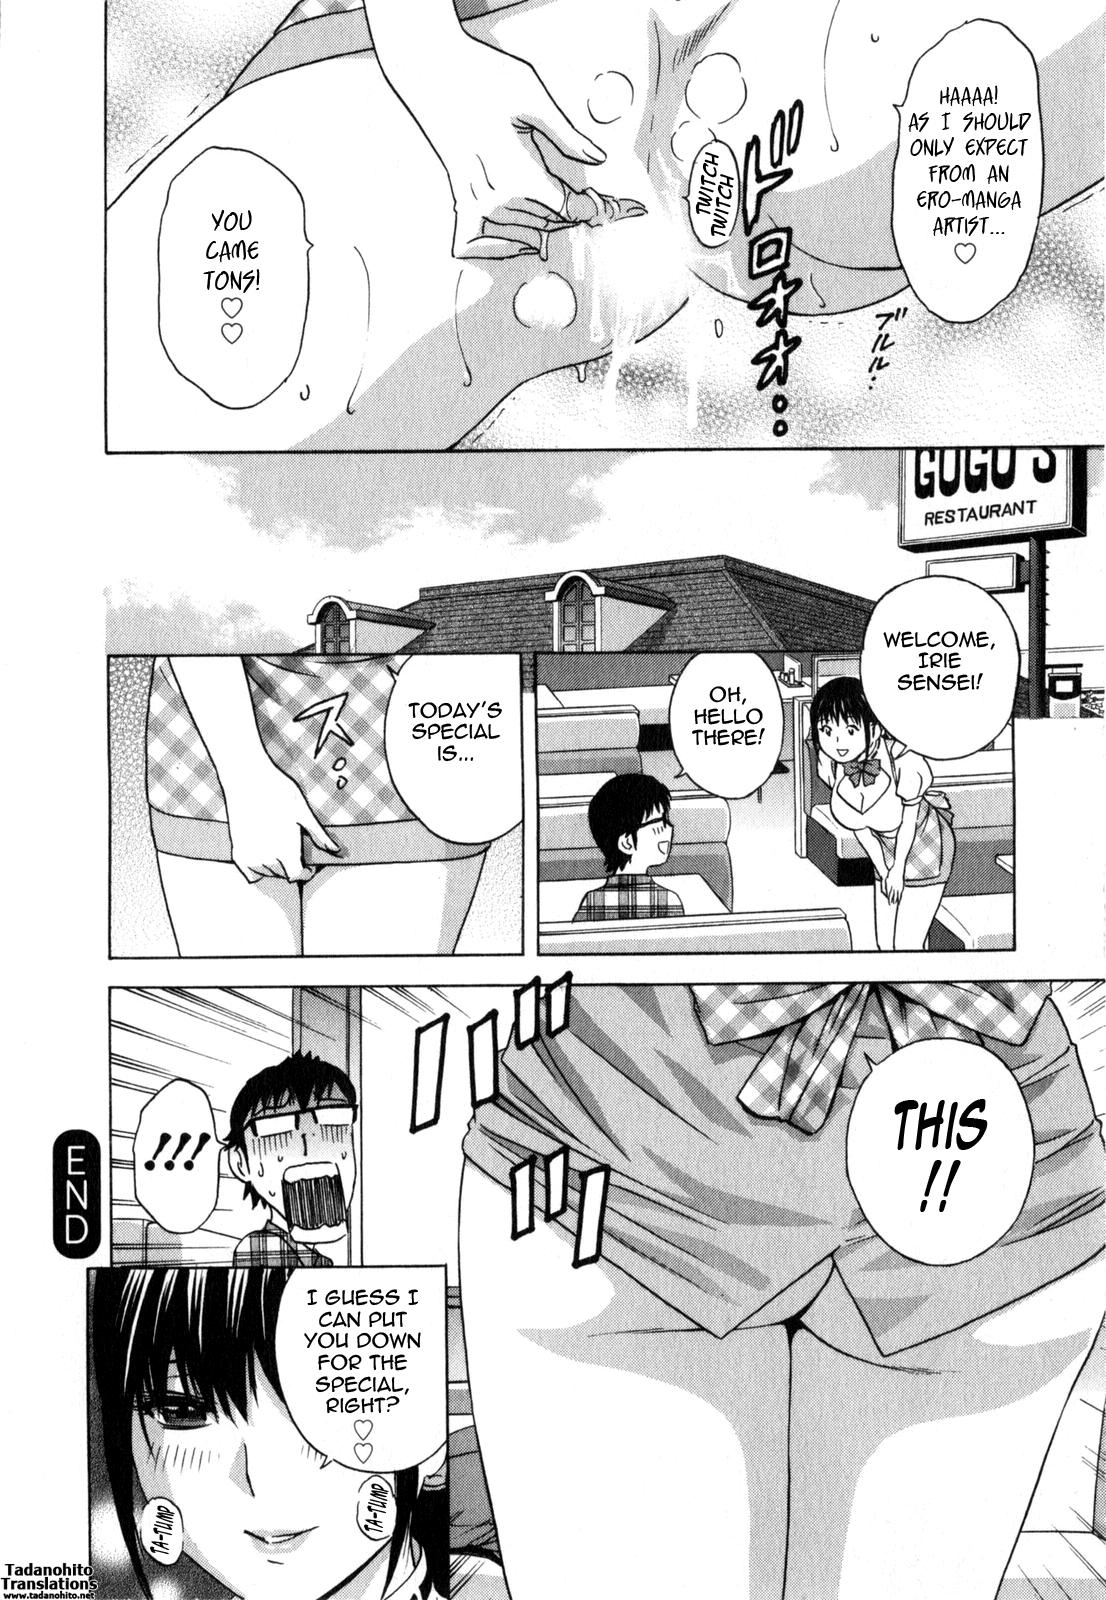 [Hidemaru] Life with Married Women Just Like a Manga 2 - Ch. 1-8 [English] {Tadanohito} 122